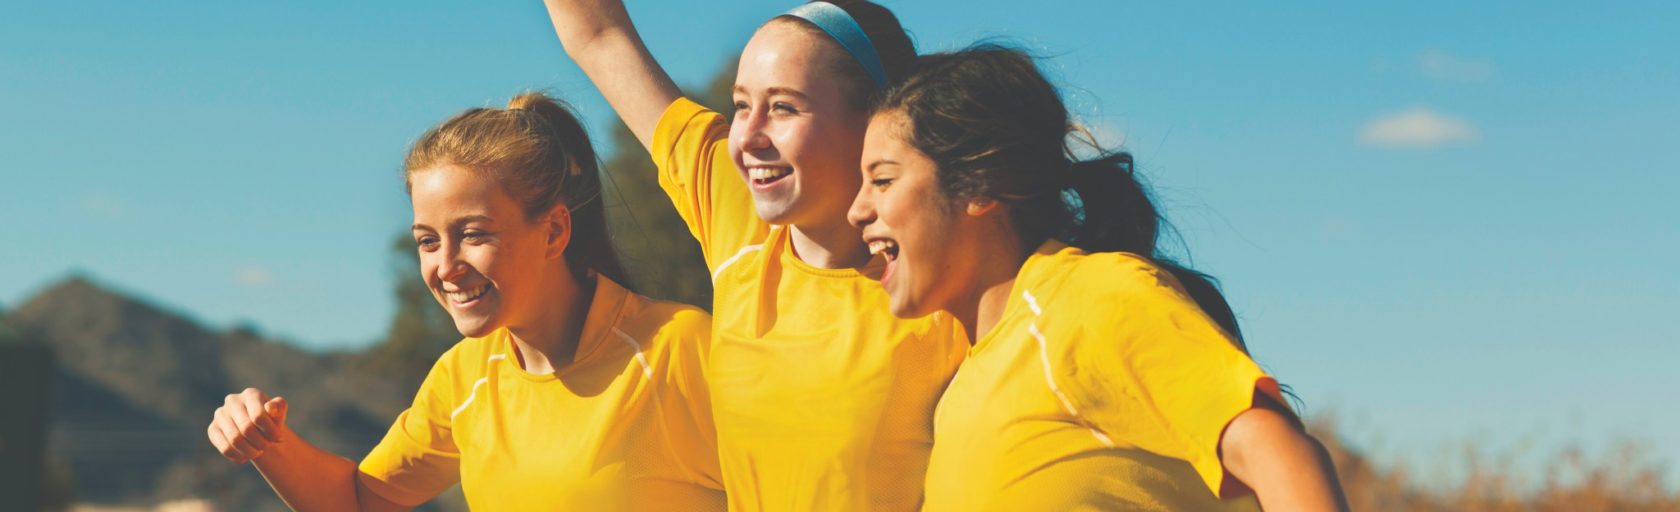 Girls in soccer uniforms smiling together.